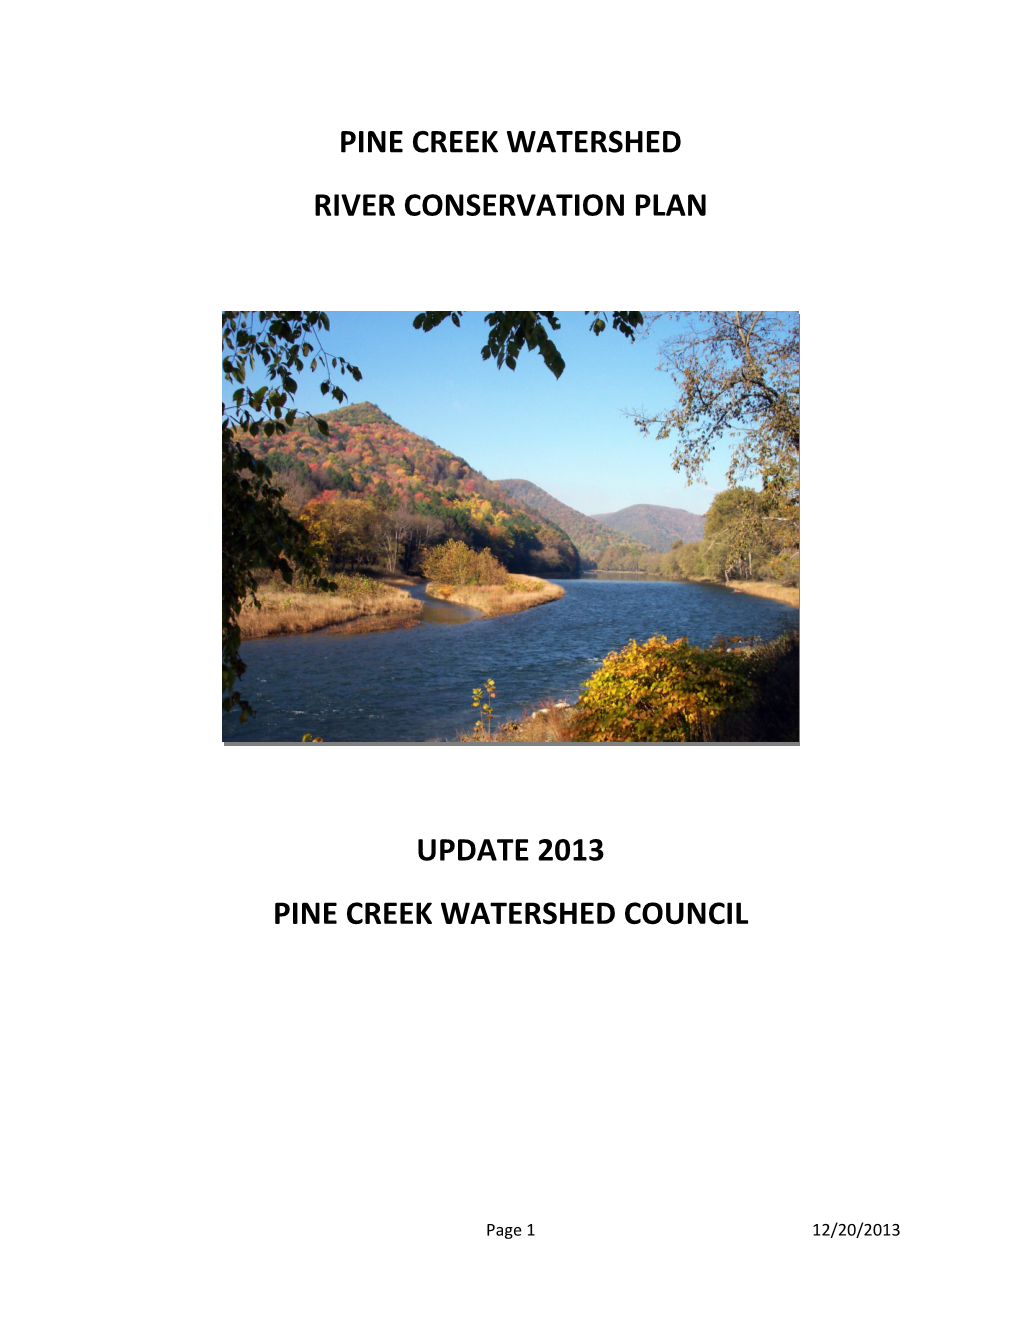 Pine Creek Watershed Conservation Plan